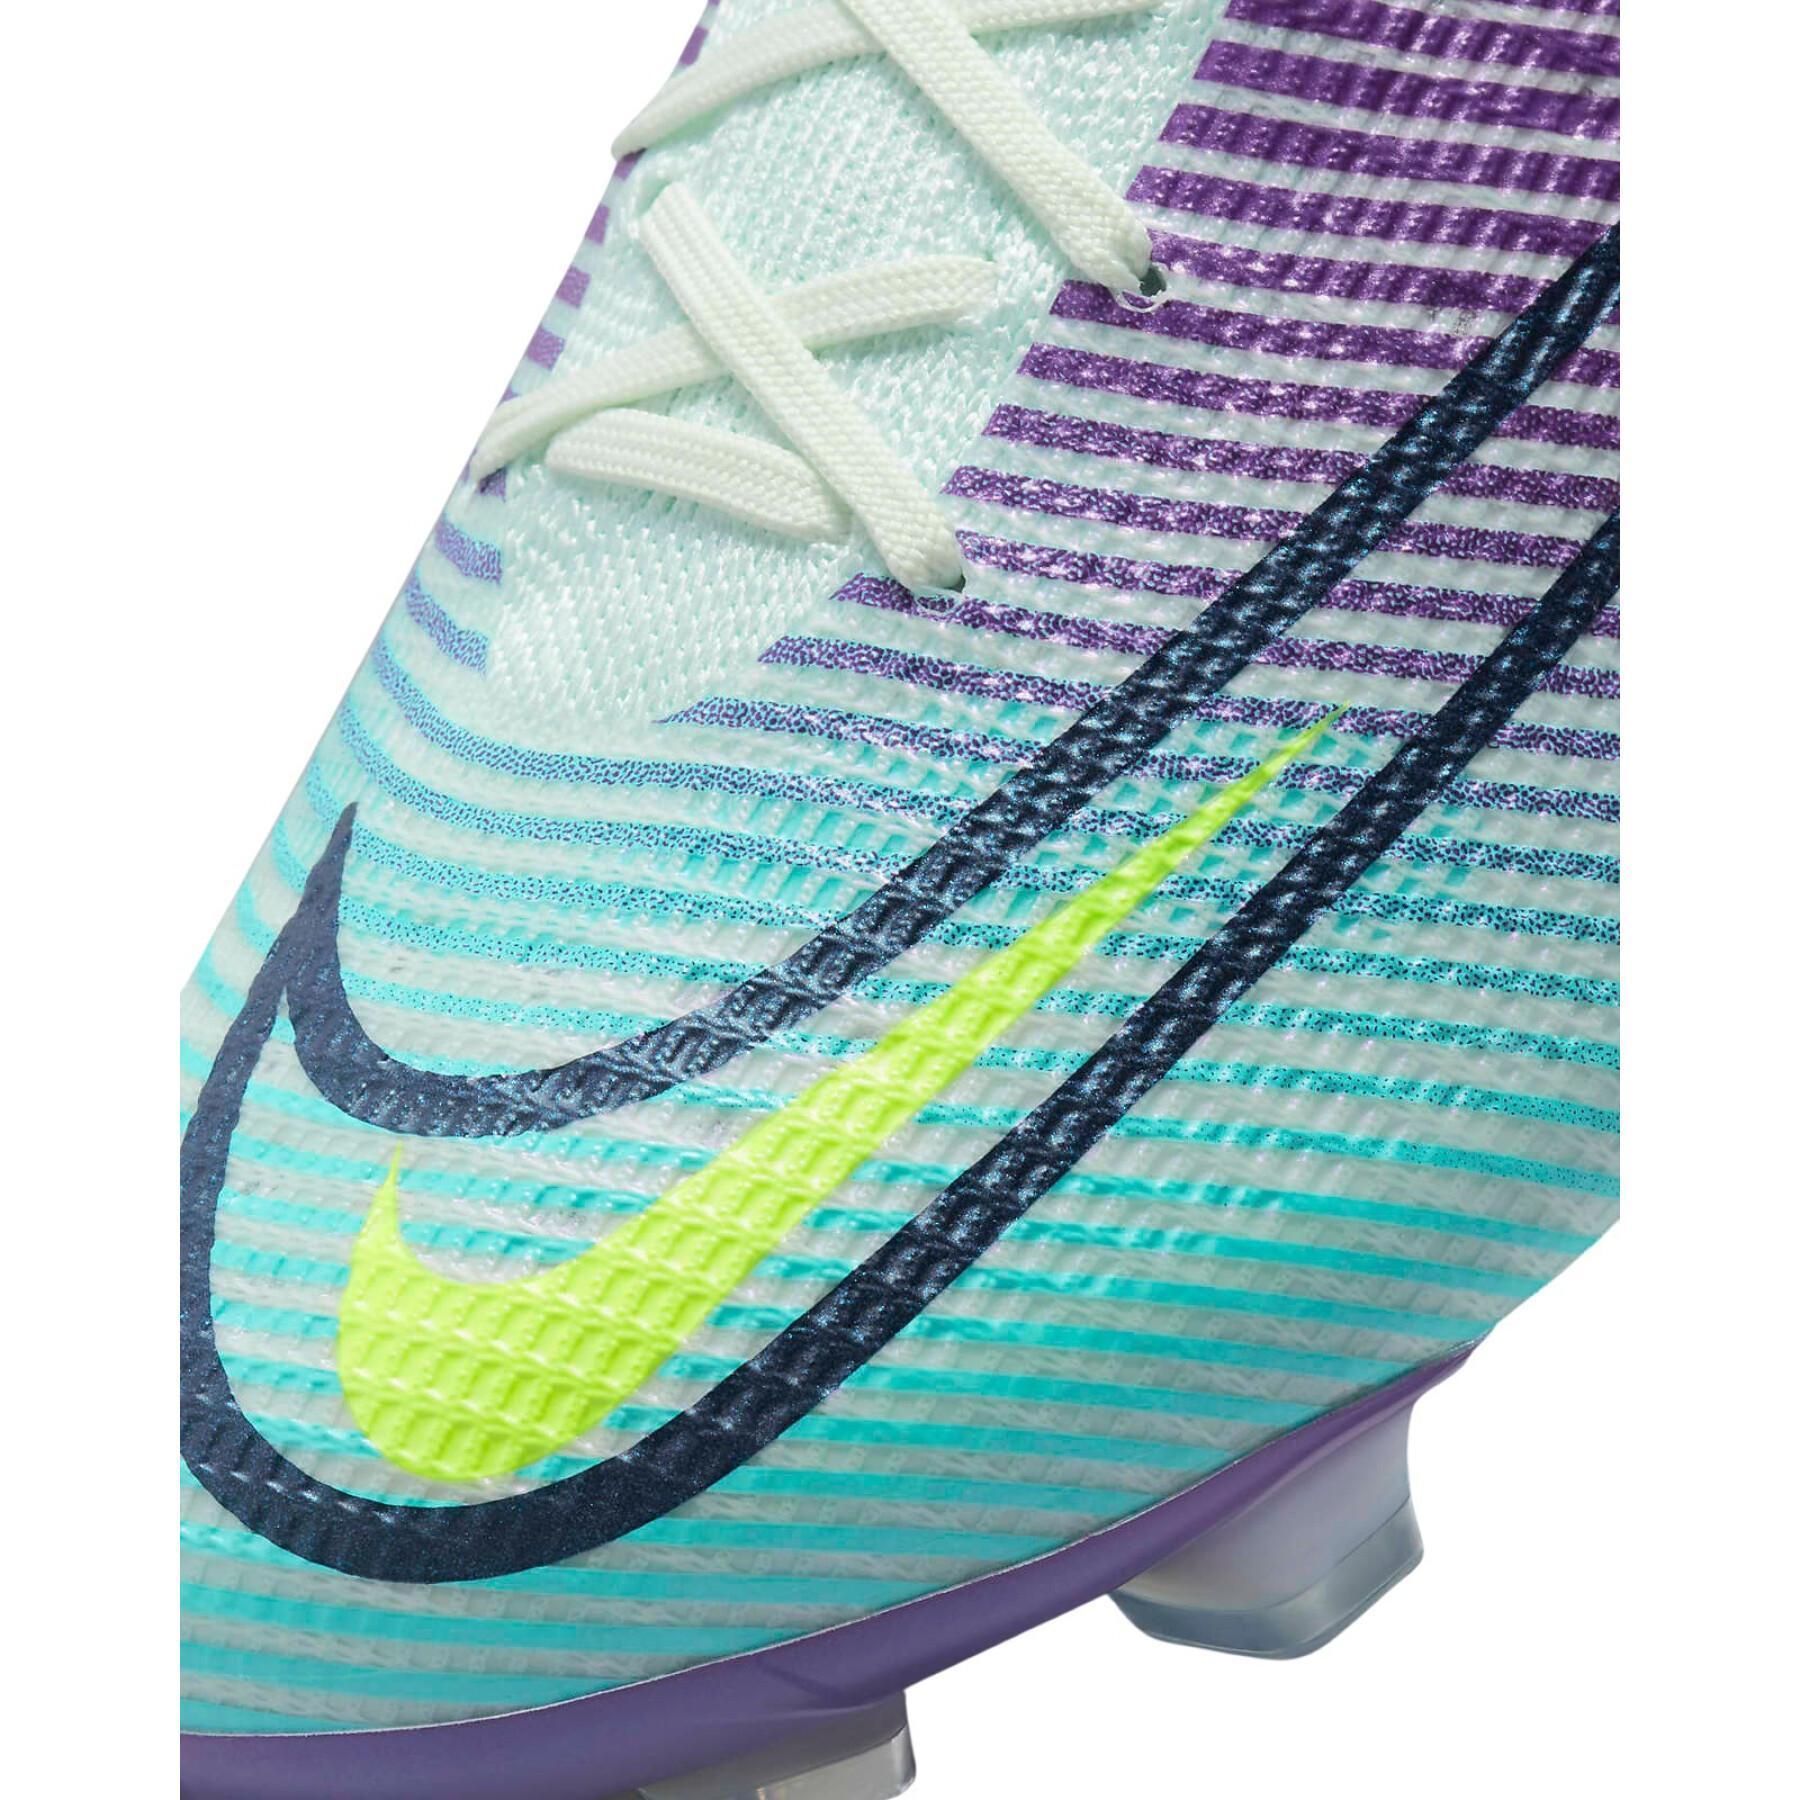 Soccer shoes Nike Vapor 14 élite MDS FG